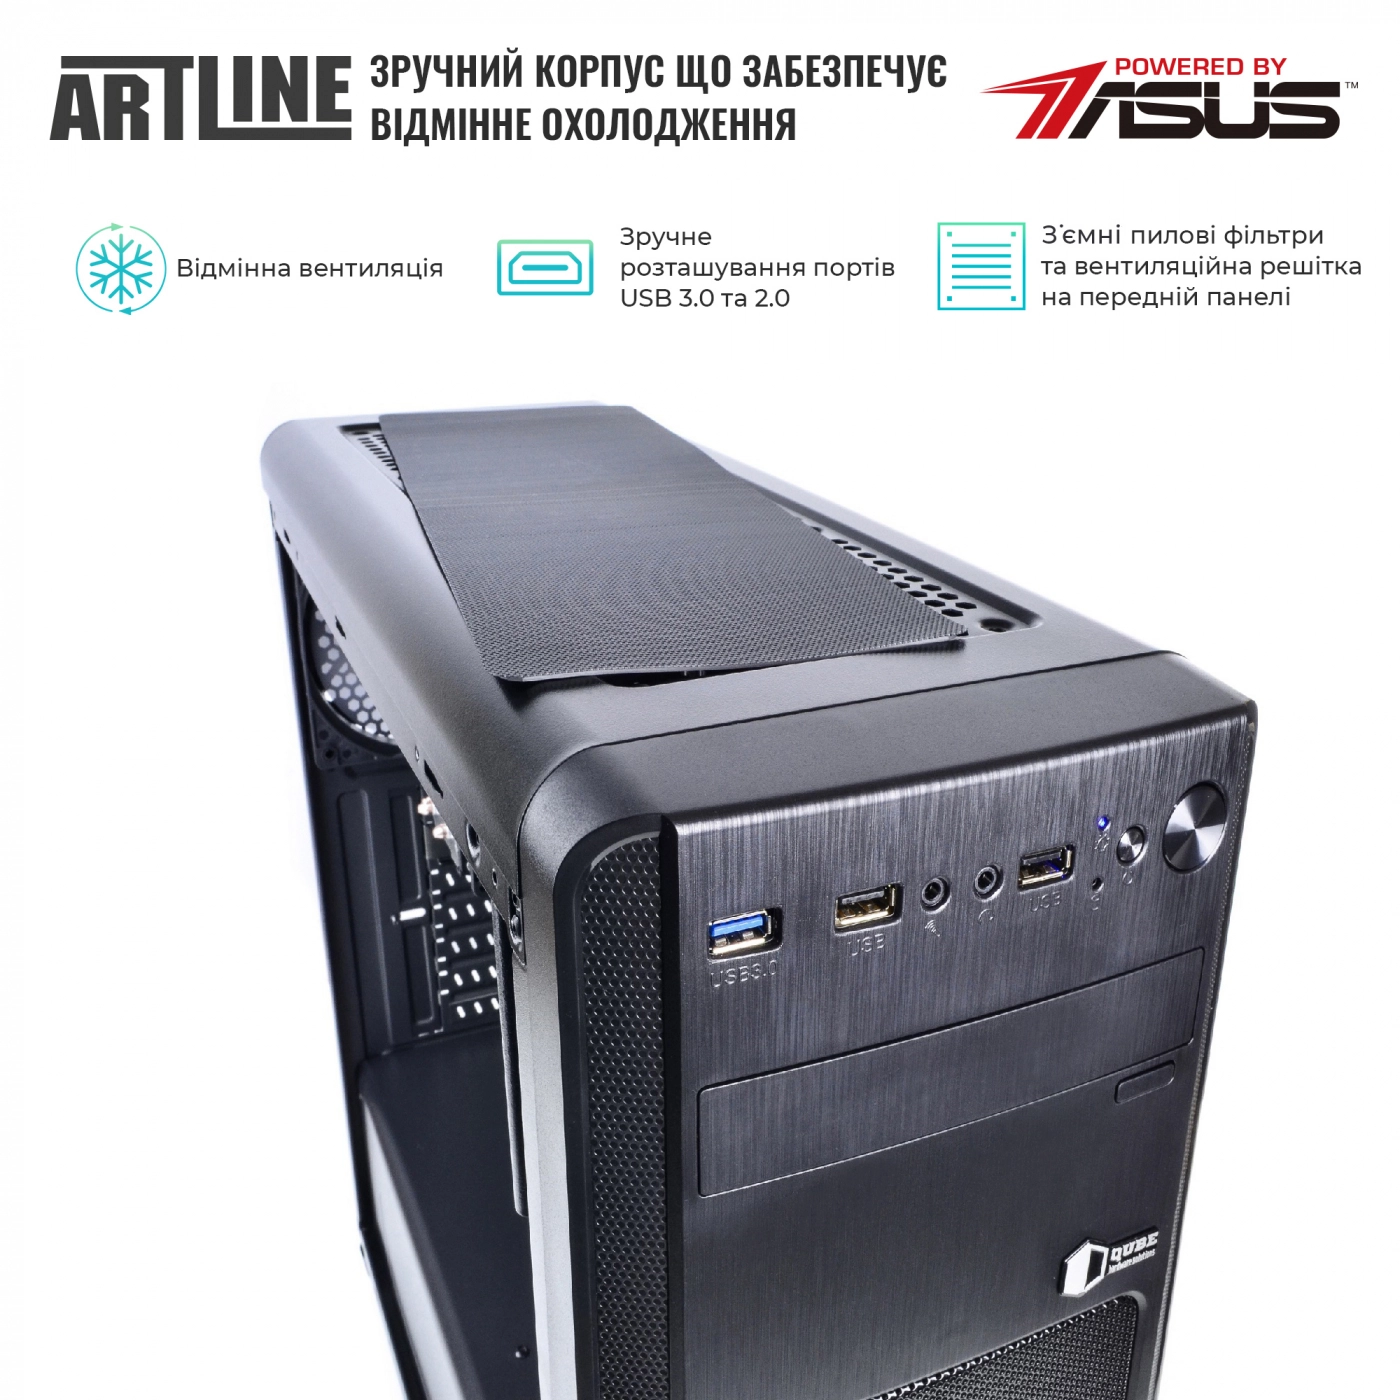 Купити Сервер ARTLINE Business T25v36 - фото 2